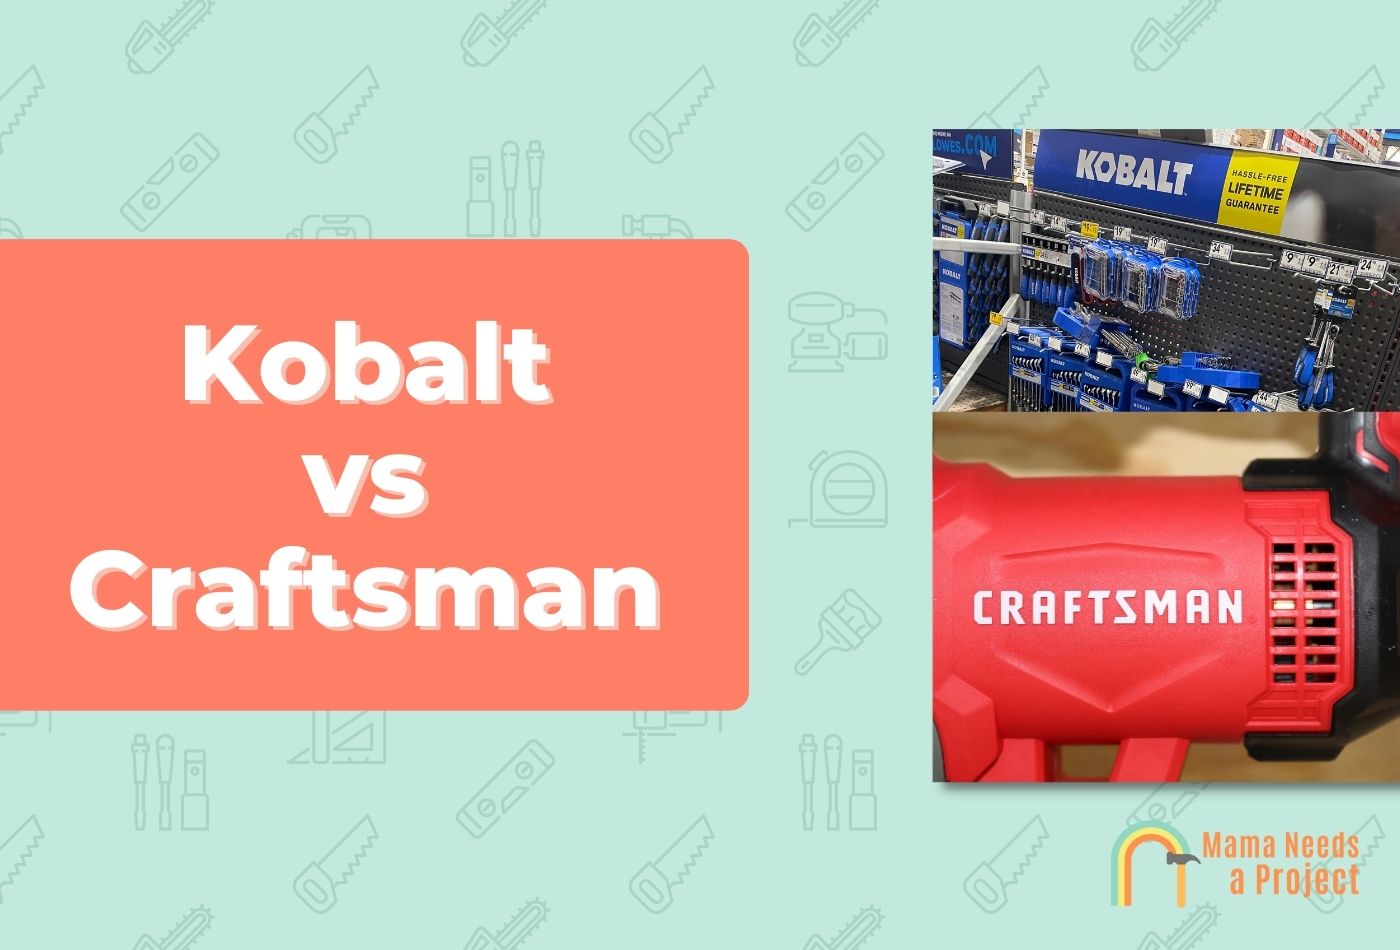 Kobalt vs Craftsman